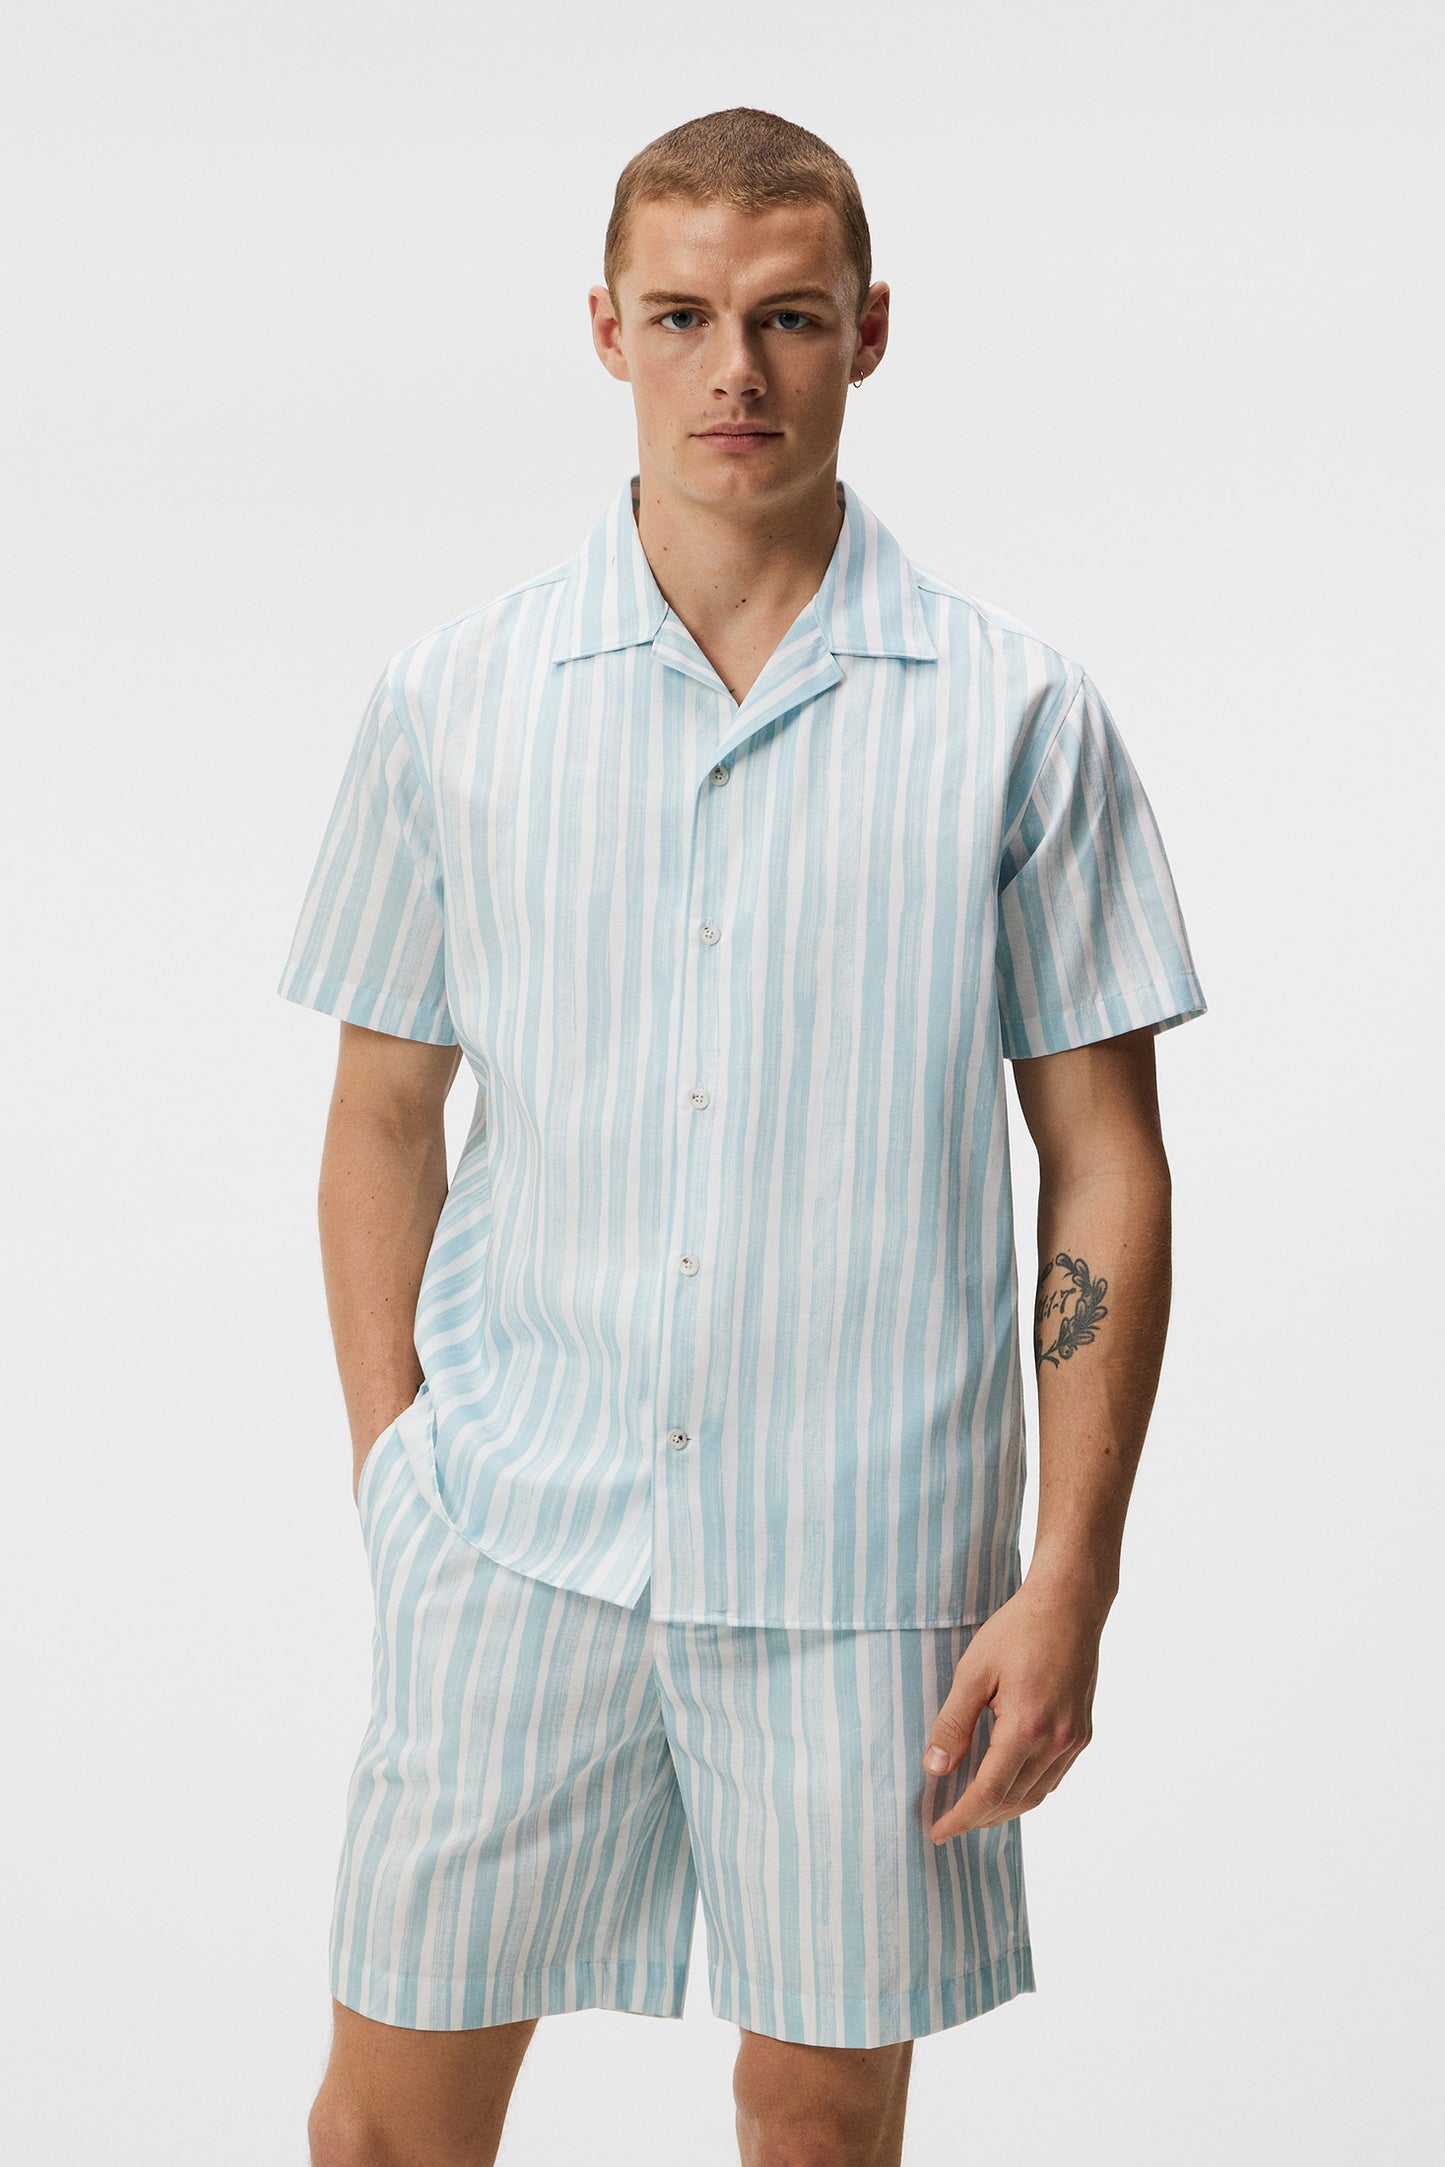 Elio Painted Stripe Reg Shirt / Dream Blue – J.Lindeberg